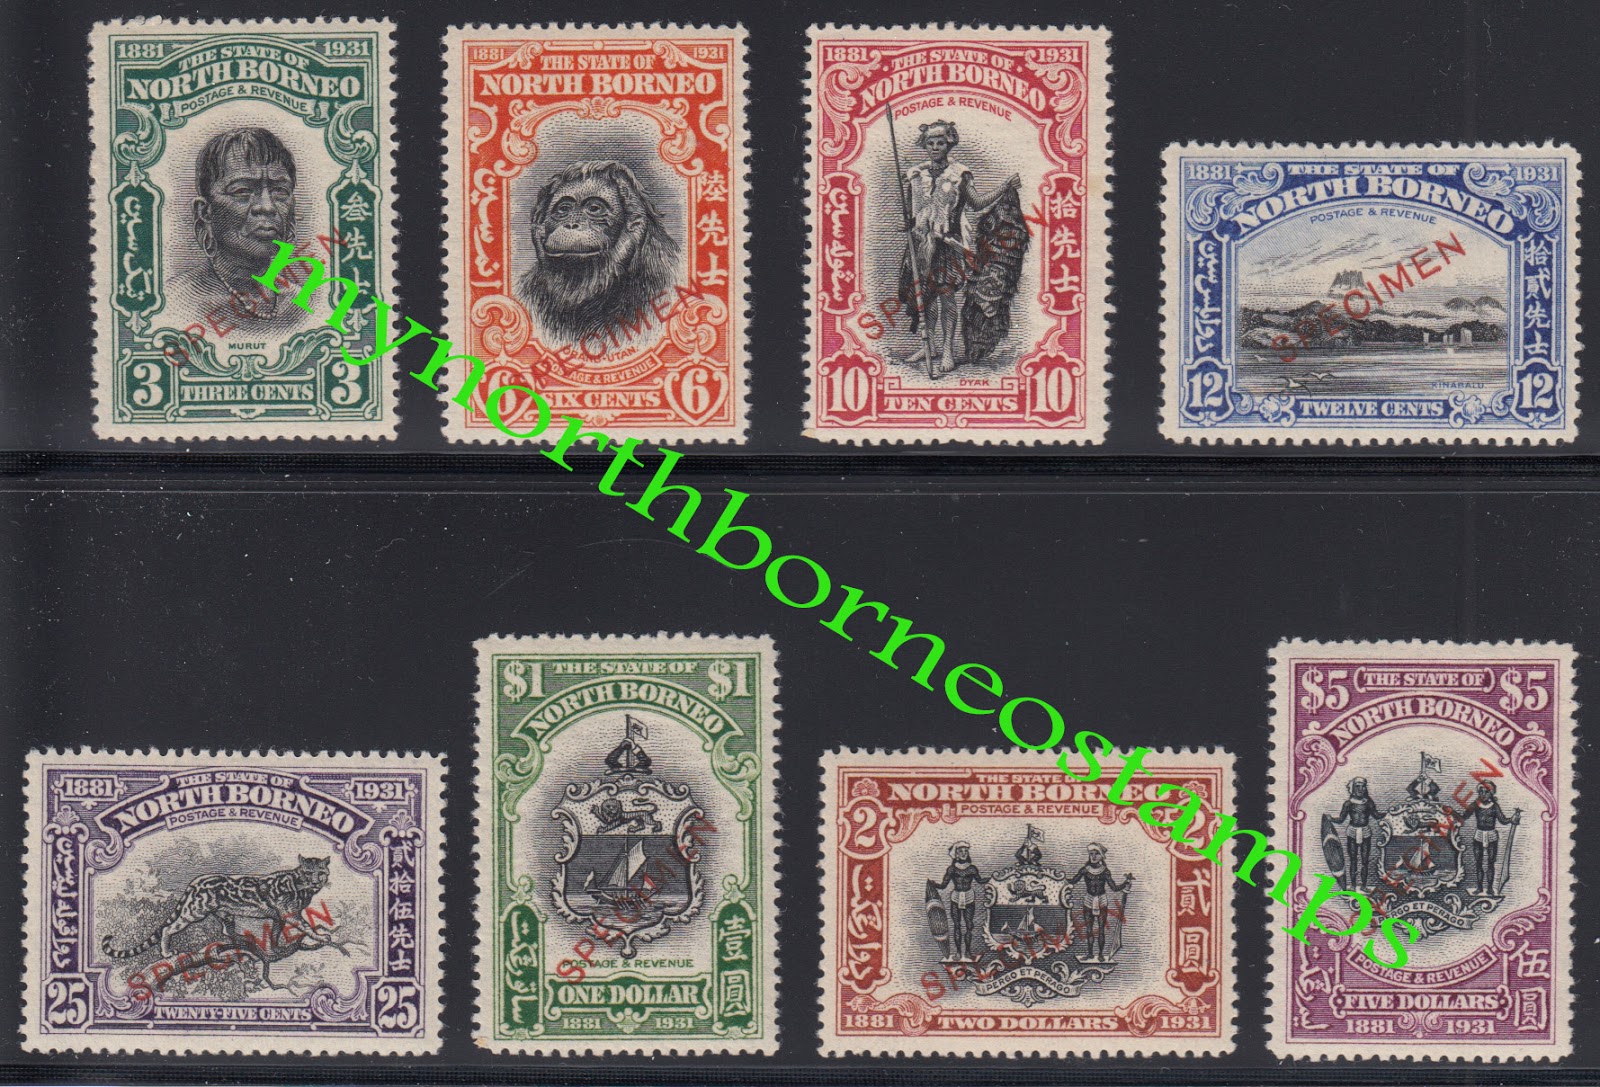 my North Borneo stamps: Some North Borneo philatelic items of interest